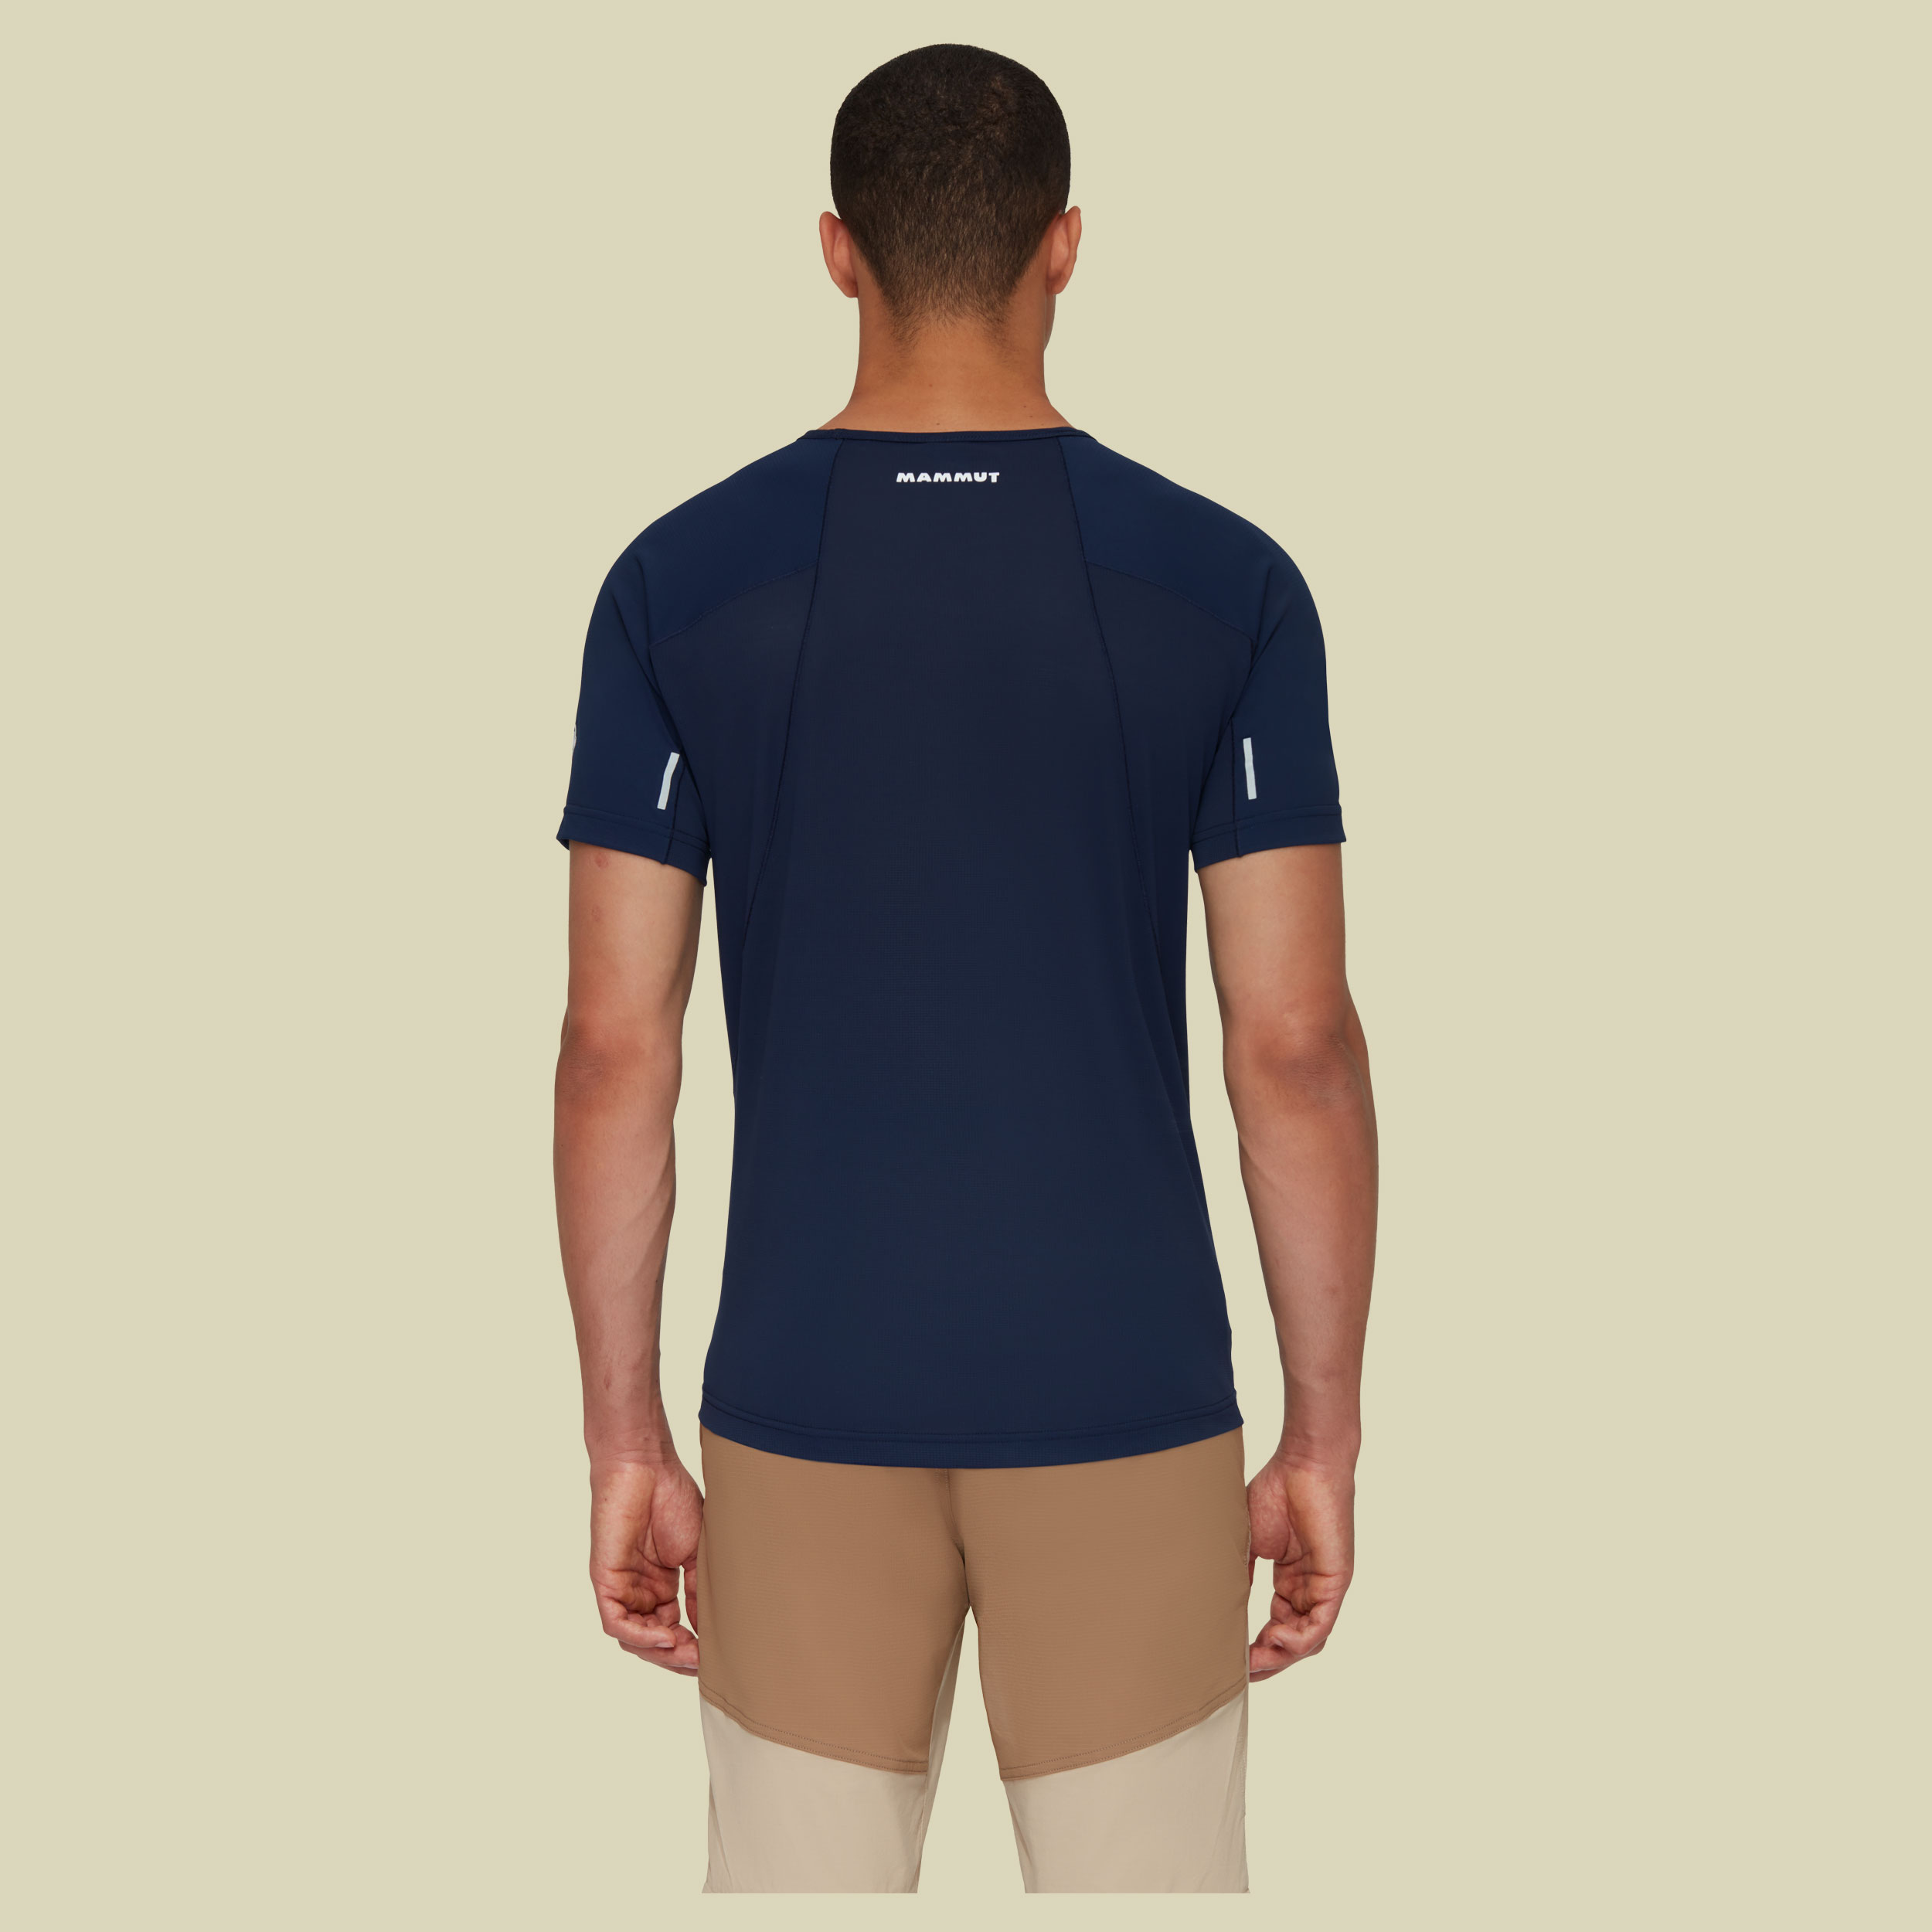 Aenergy FL T-Shirt Men marine XL